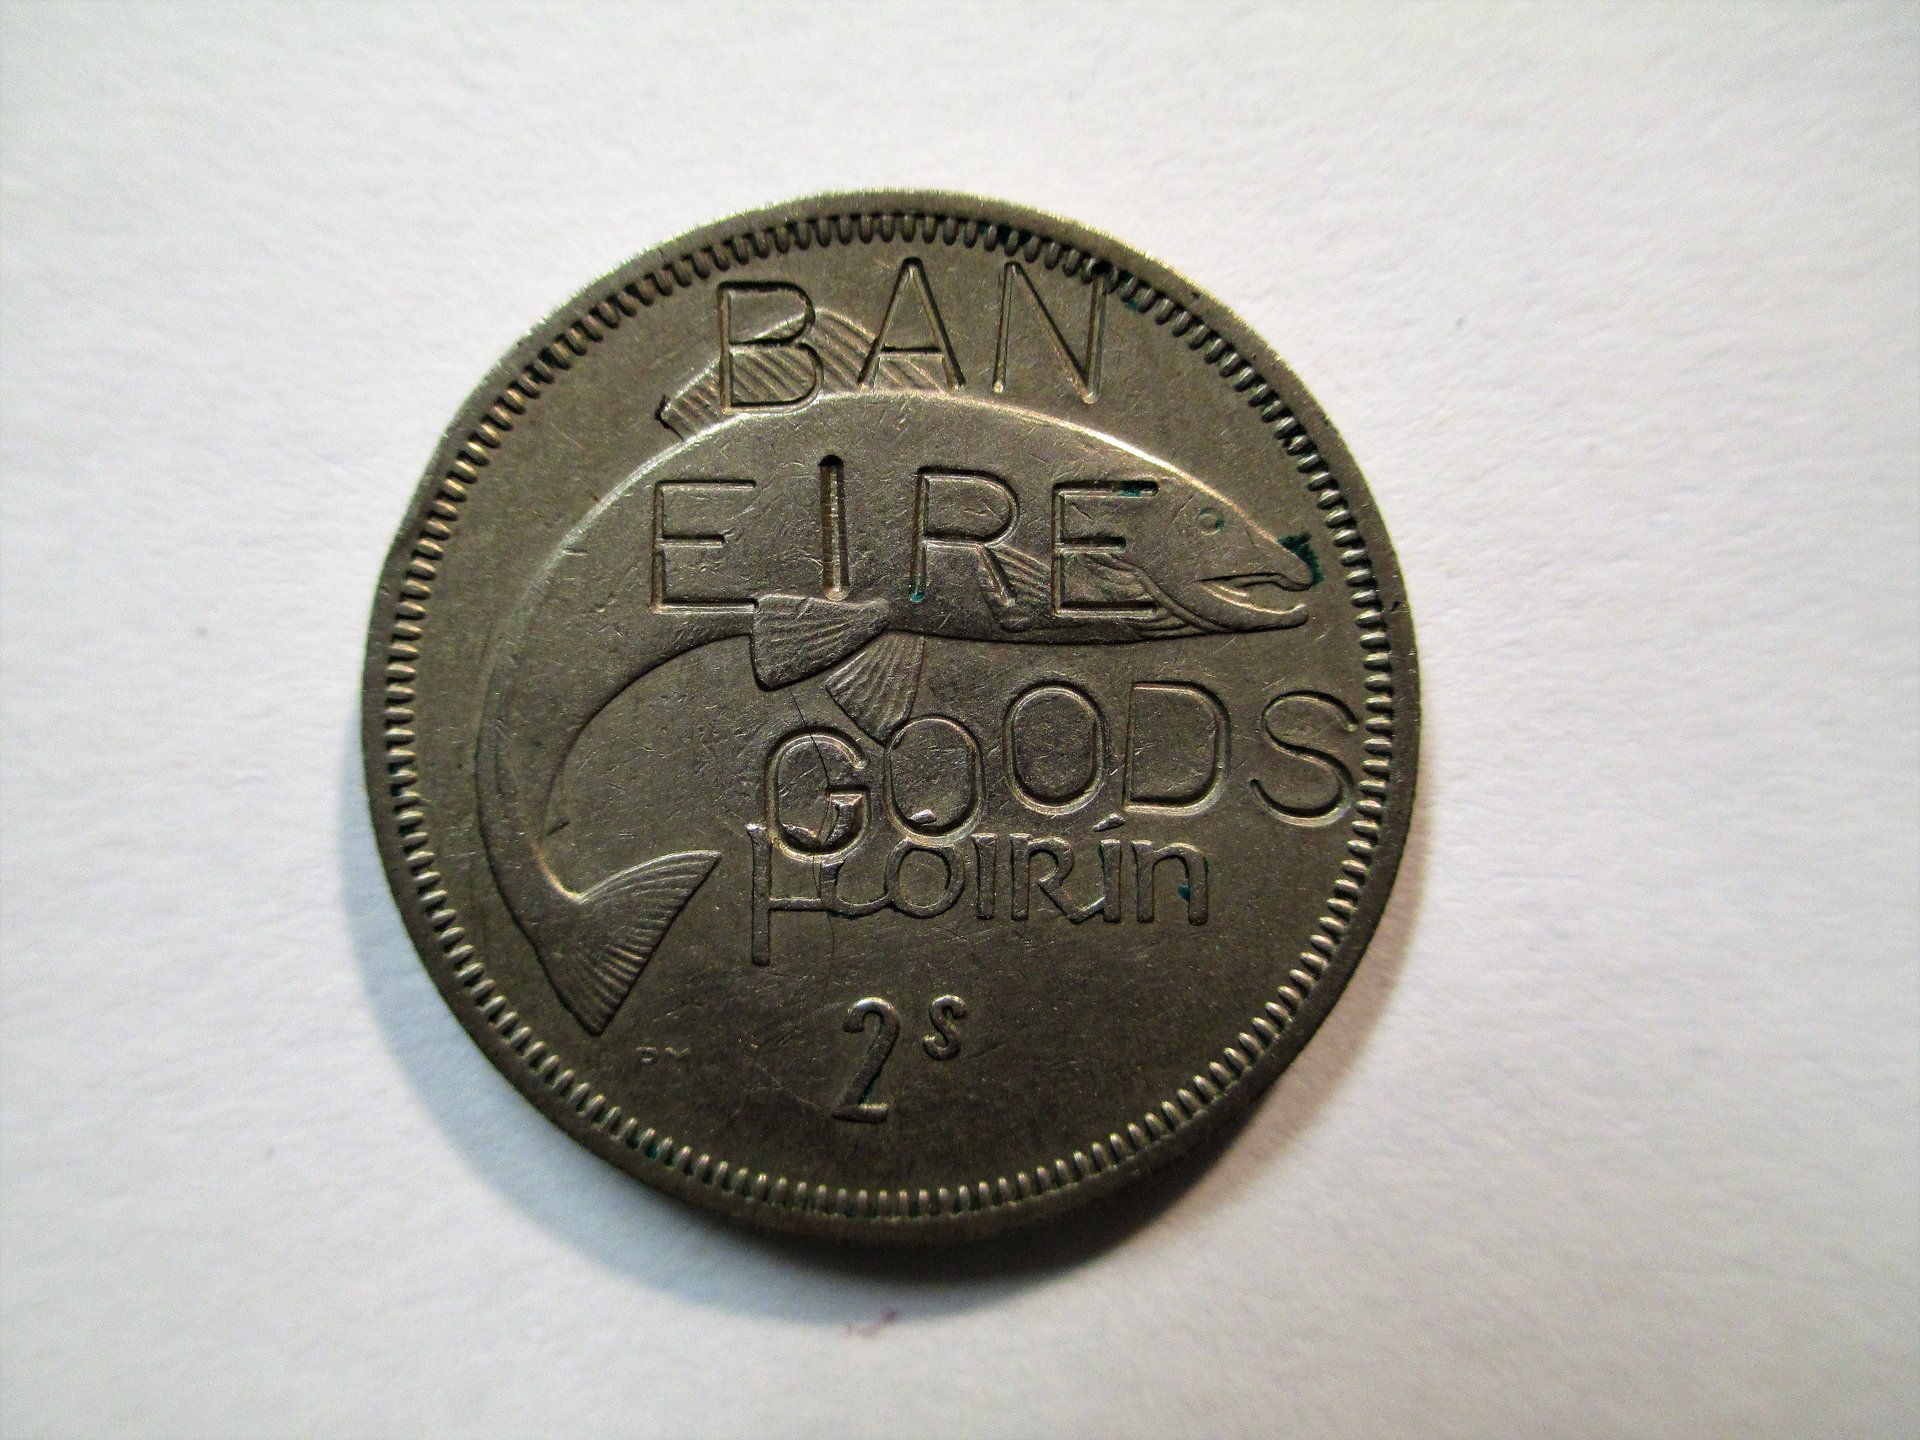 Ban Eire Goods 1.JPG